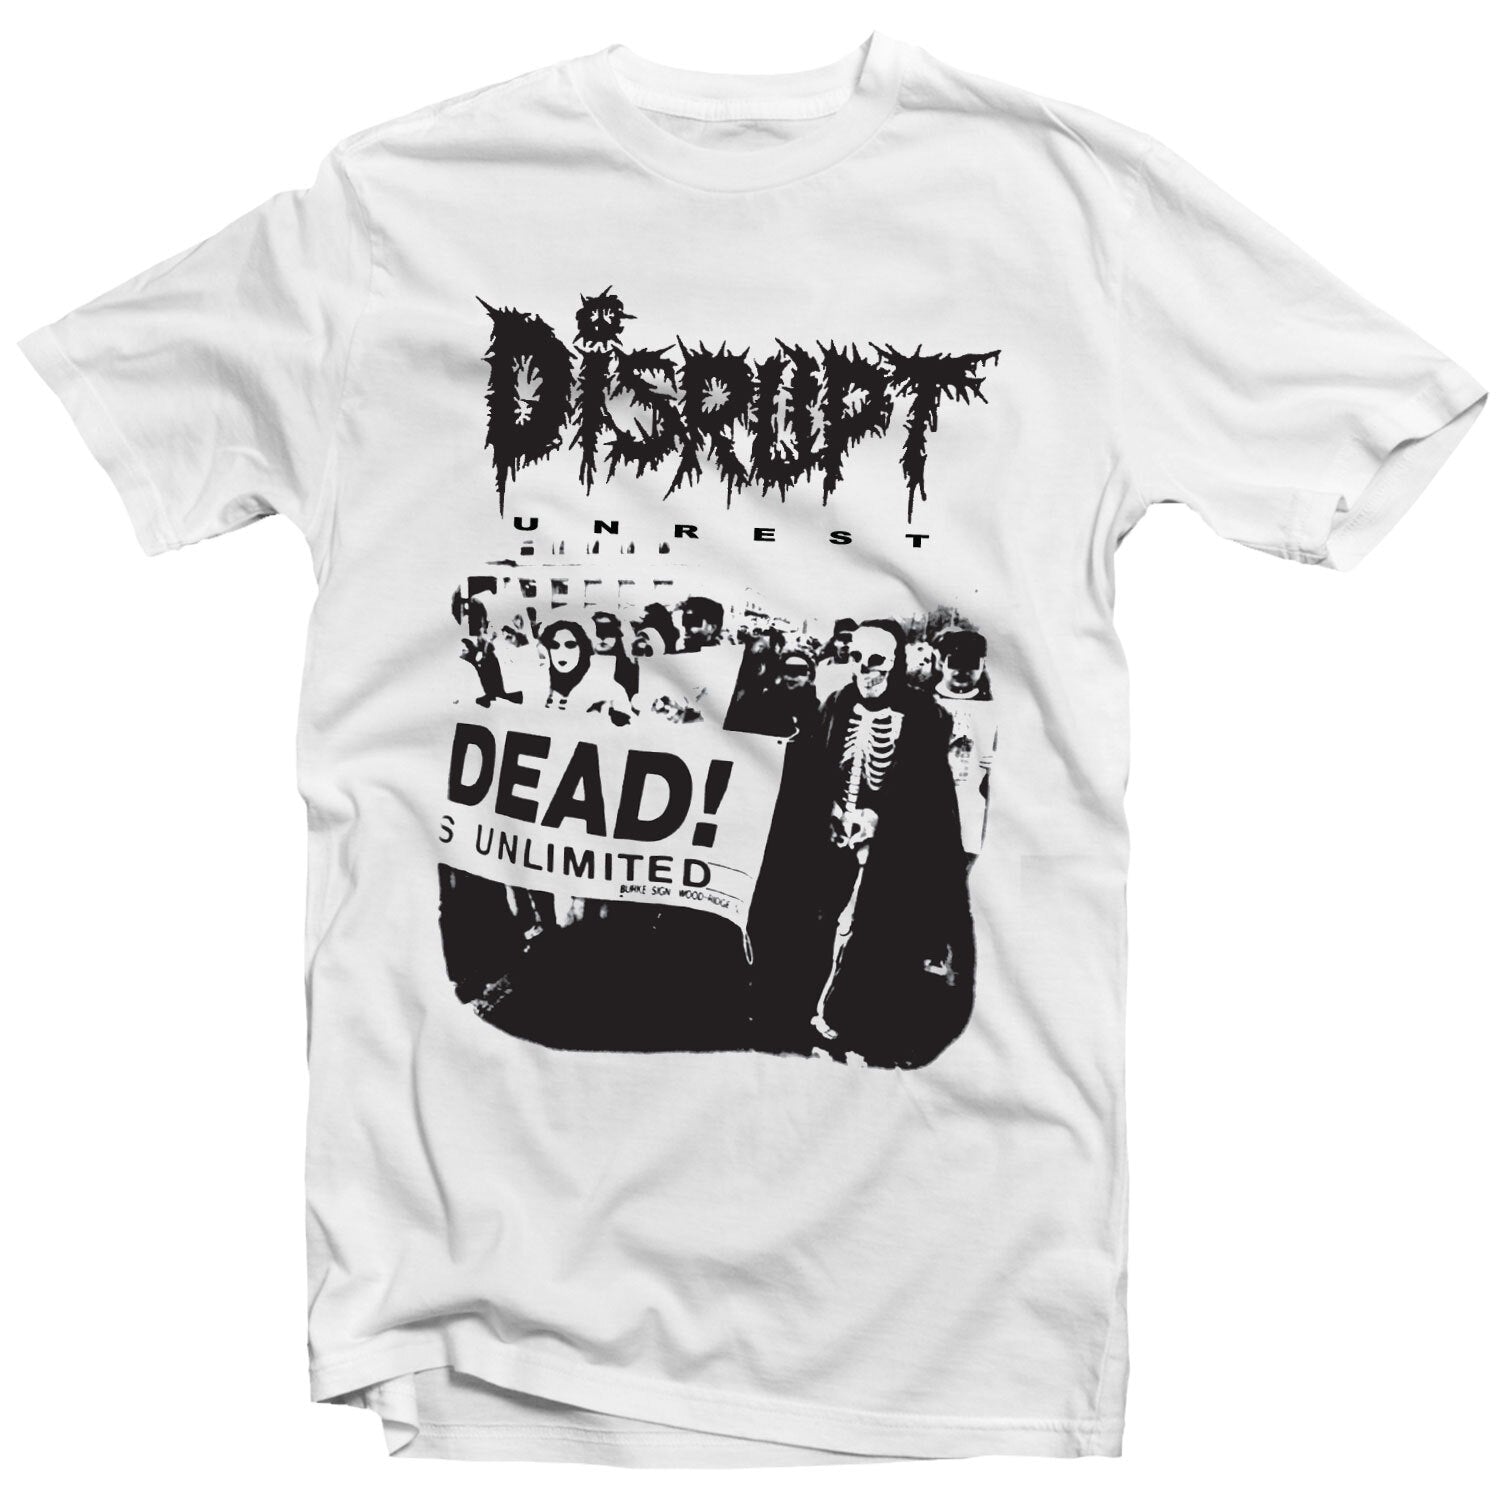 Disrupt "Unrest" T-Shirt